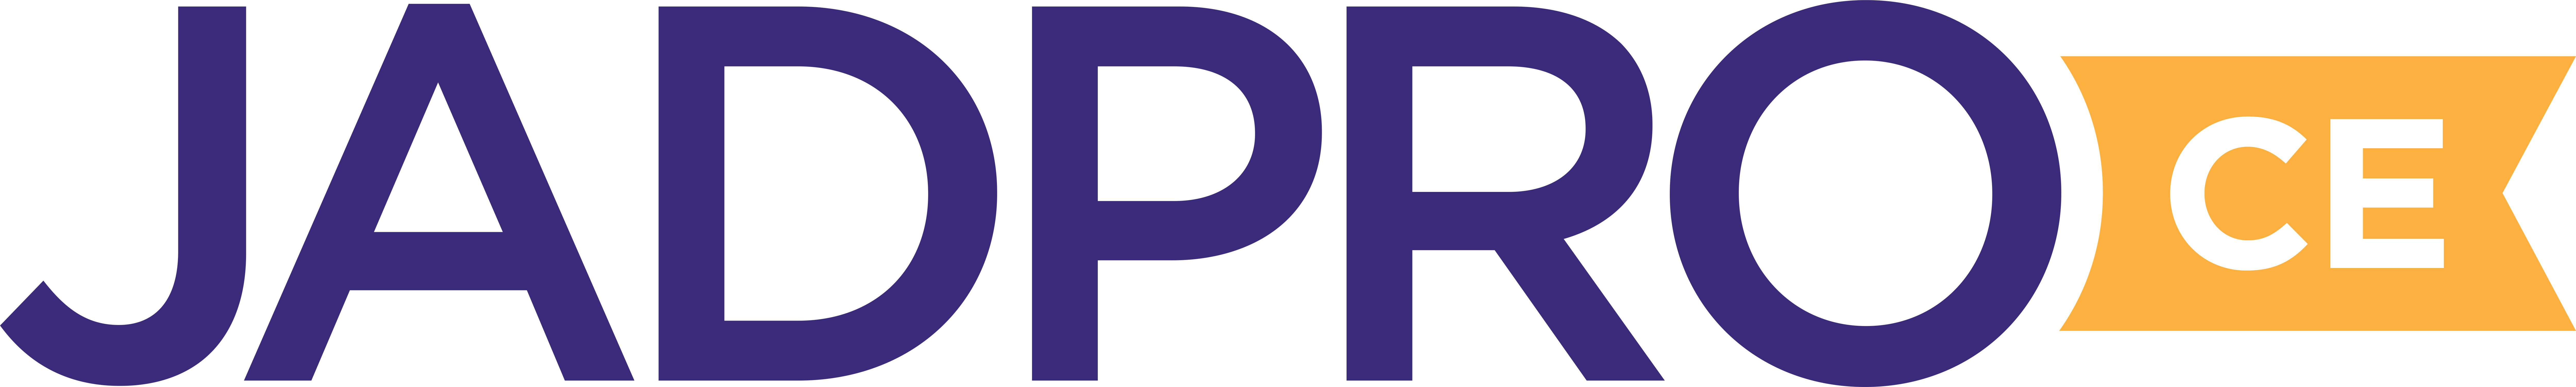 JADPRO CE Logo